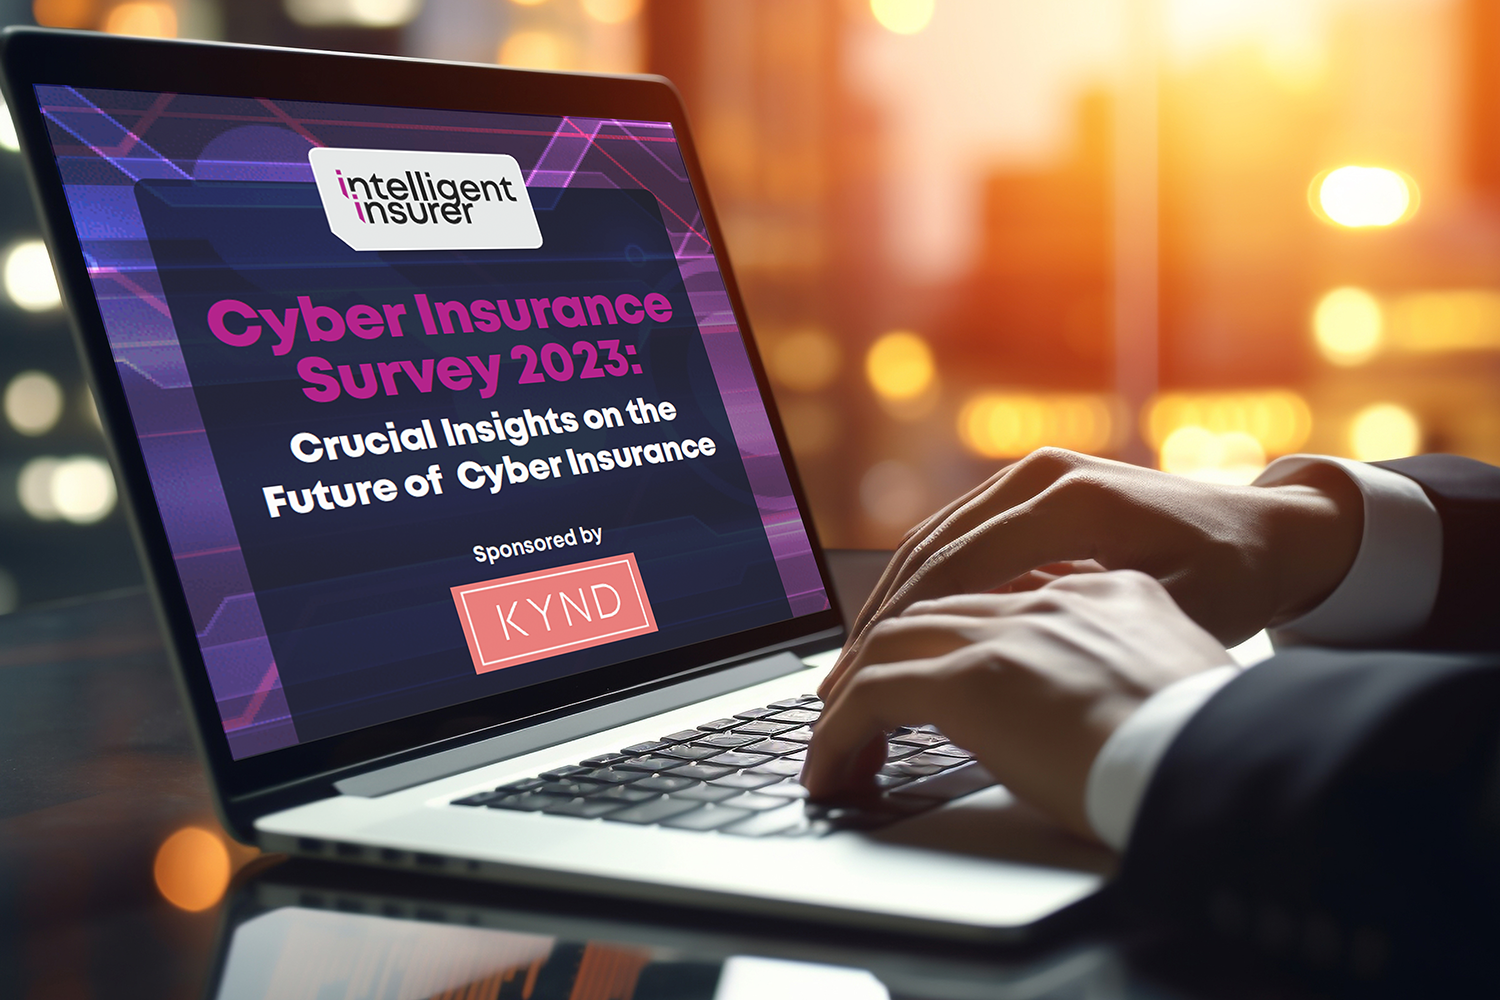 KYND and Intelligent Insurer survey reveals key insights driving cyber insurance market transformation